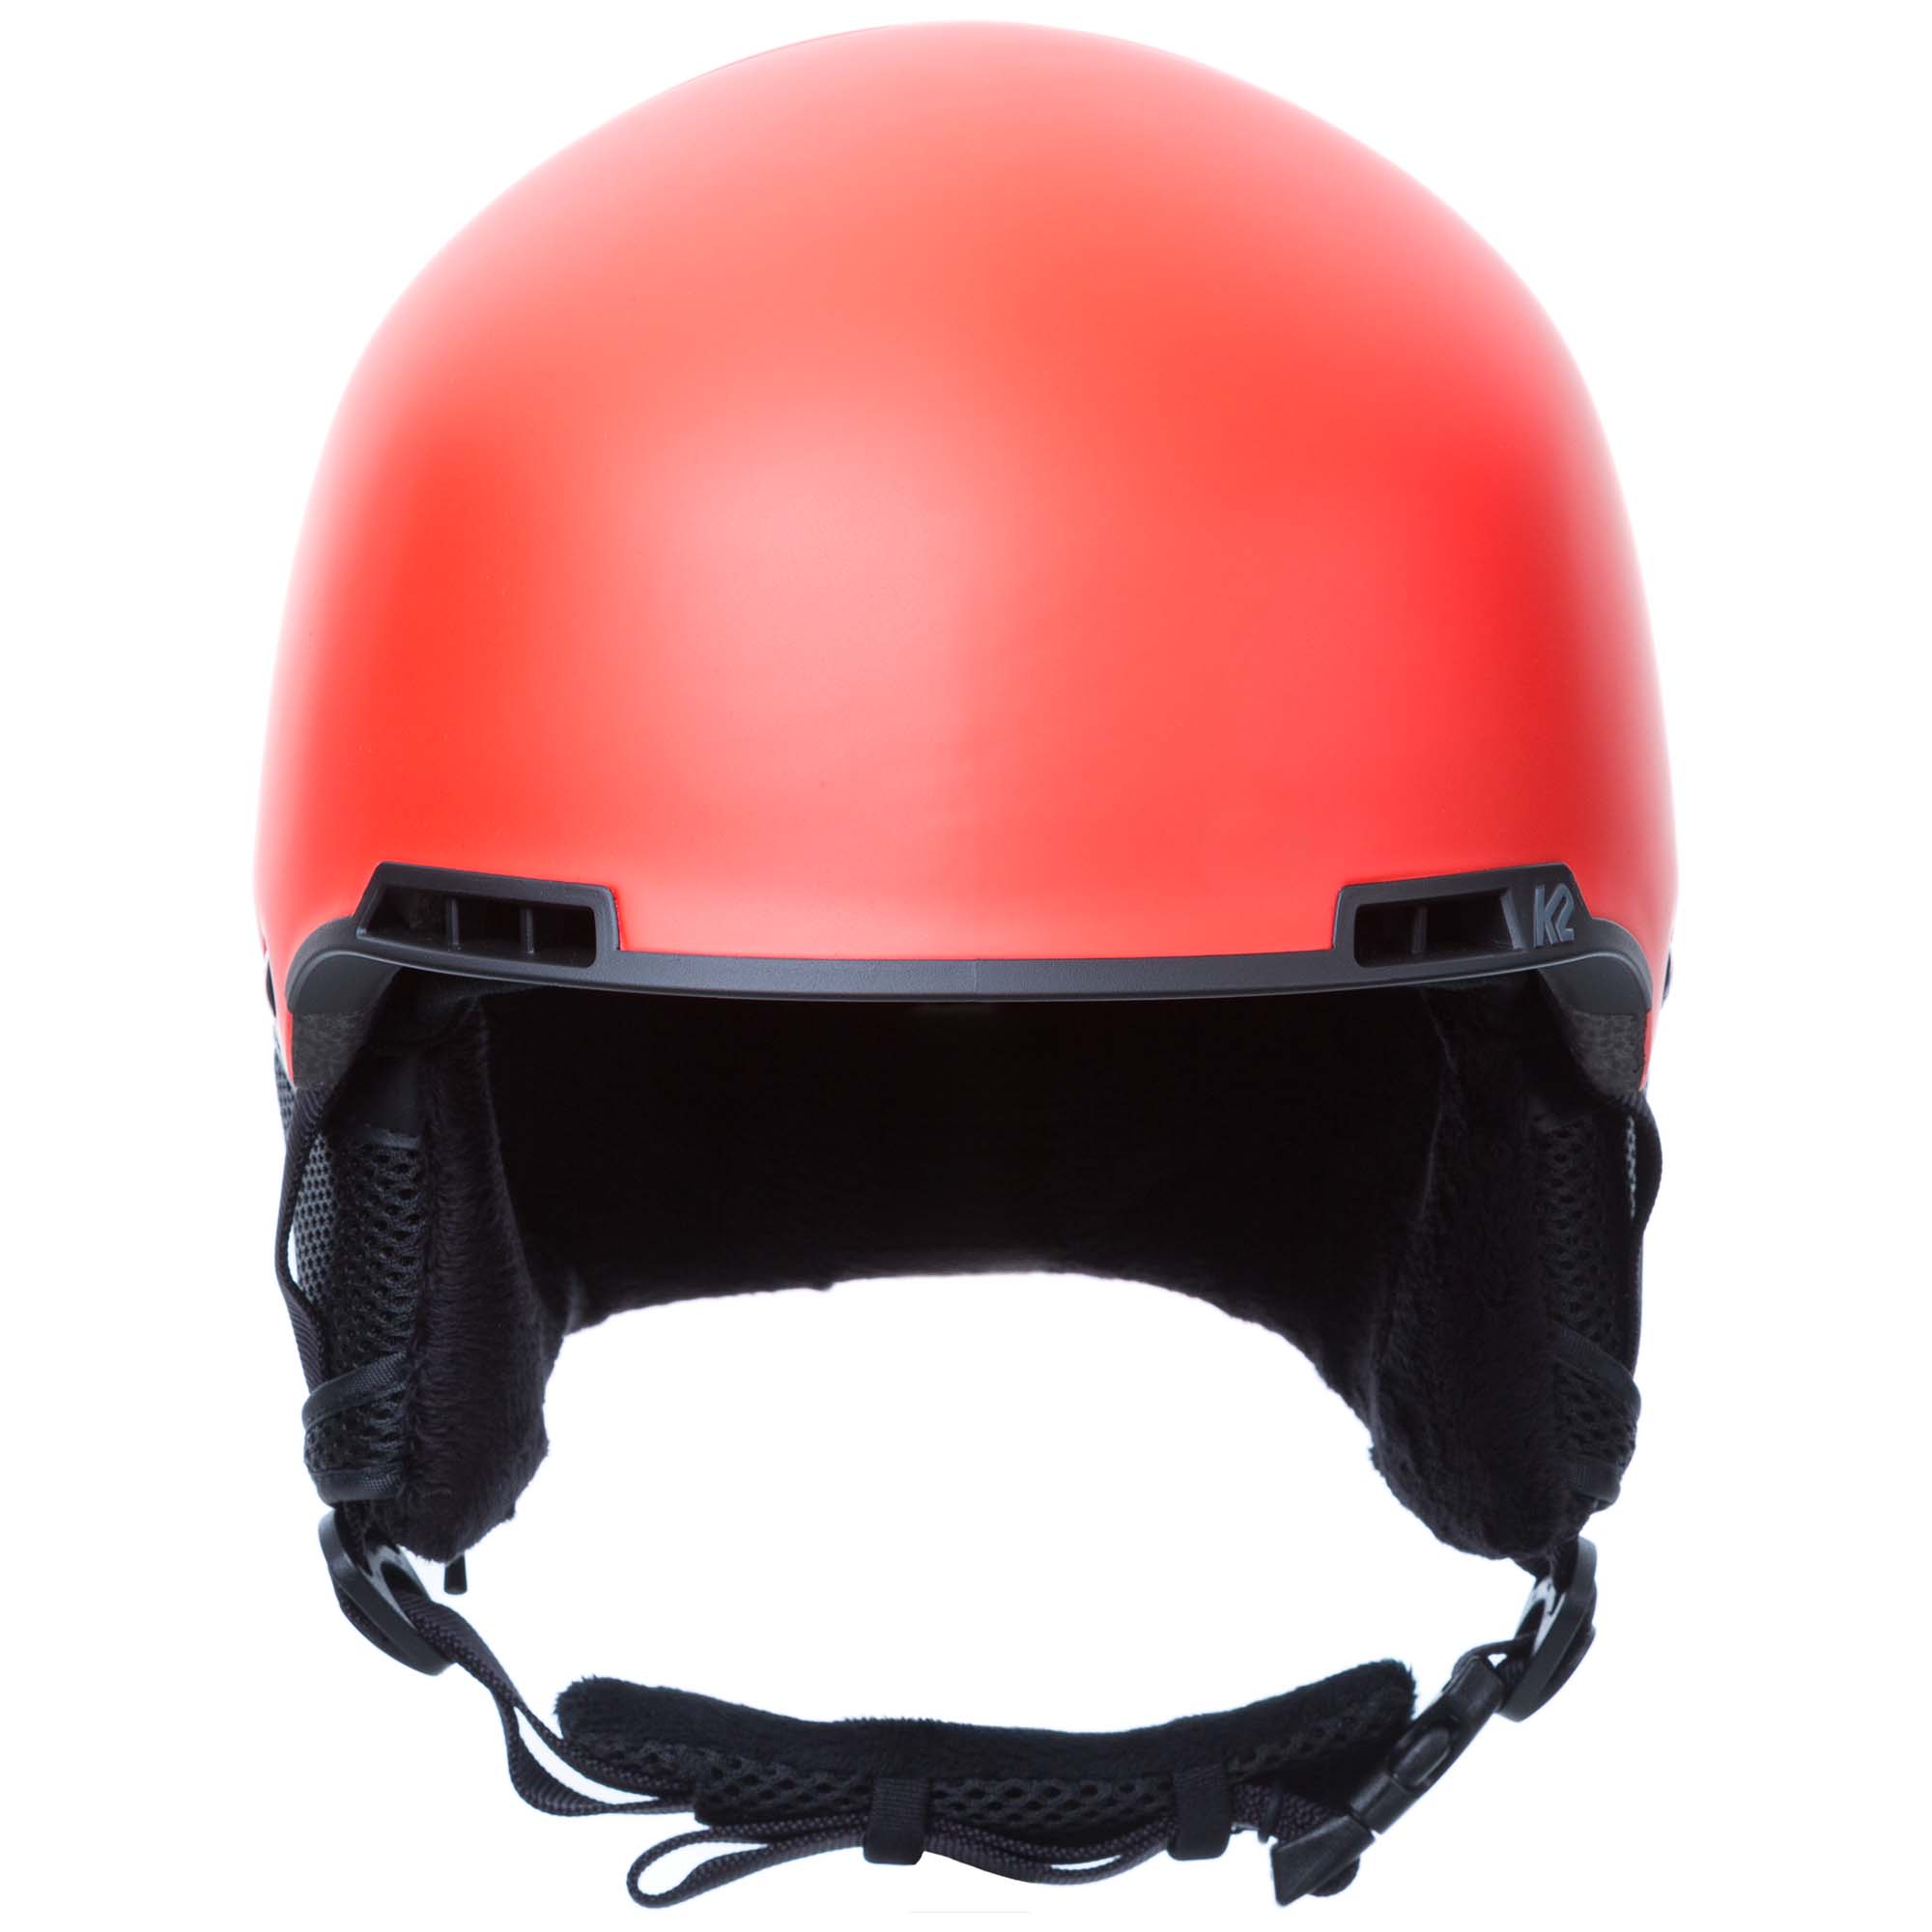 K2 Stash Ski/Snowboard/Bike Helmet